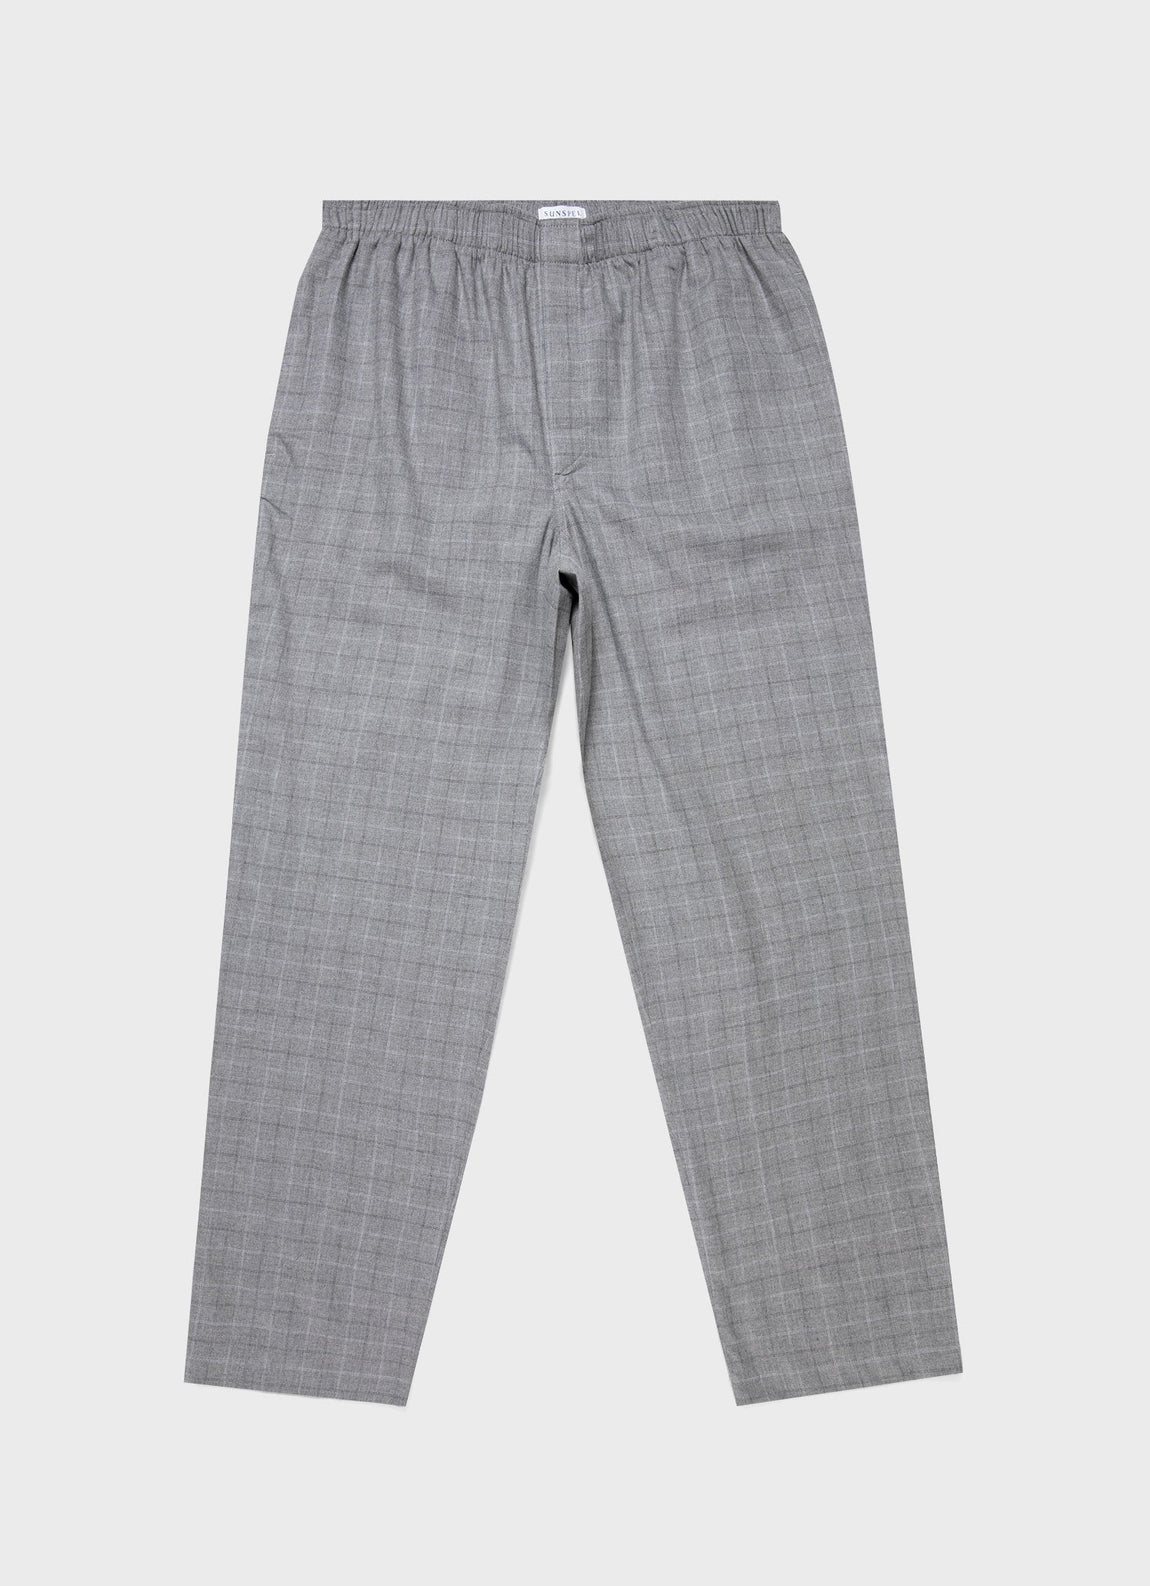 Men's Cotton Flannel Pyjama Trouser in Mid Grey Check